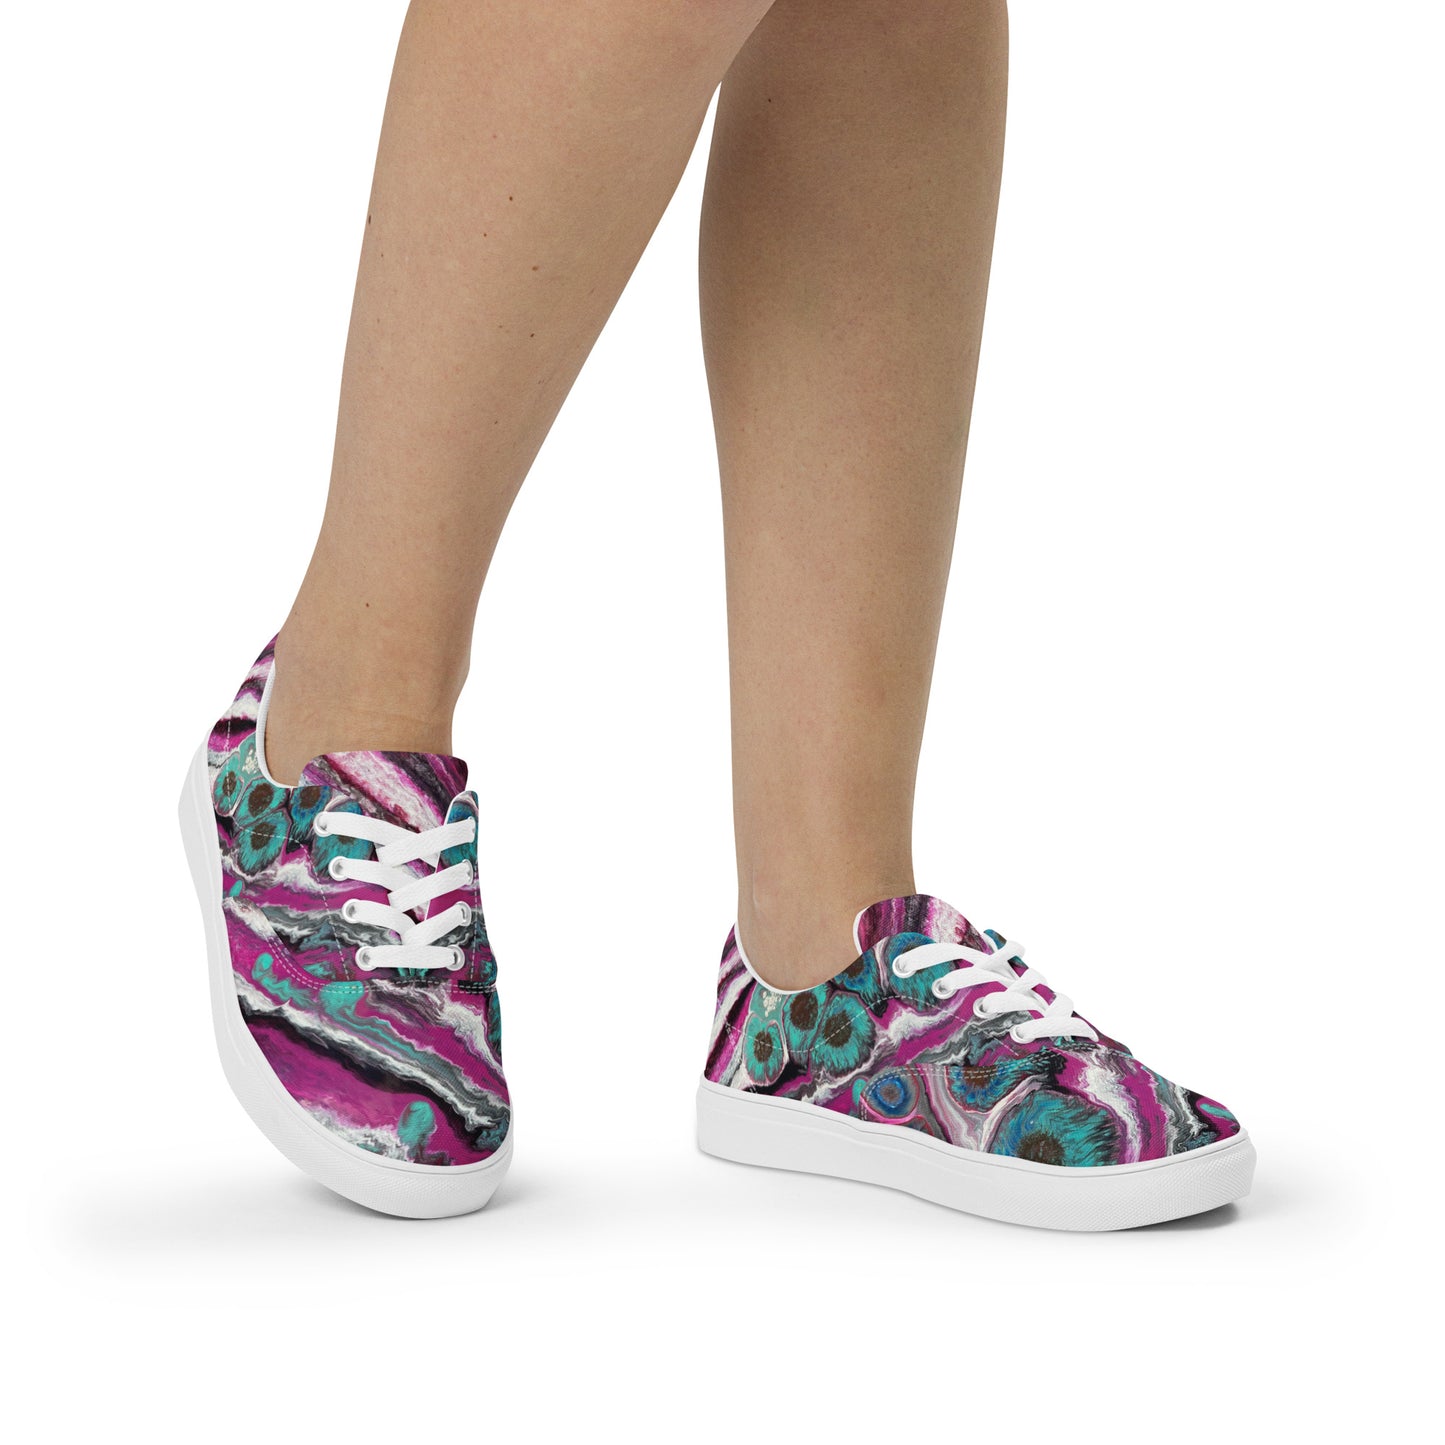 Women’s lace-up canvas shoes - Neon Canyon design